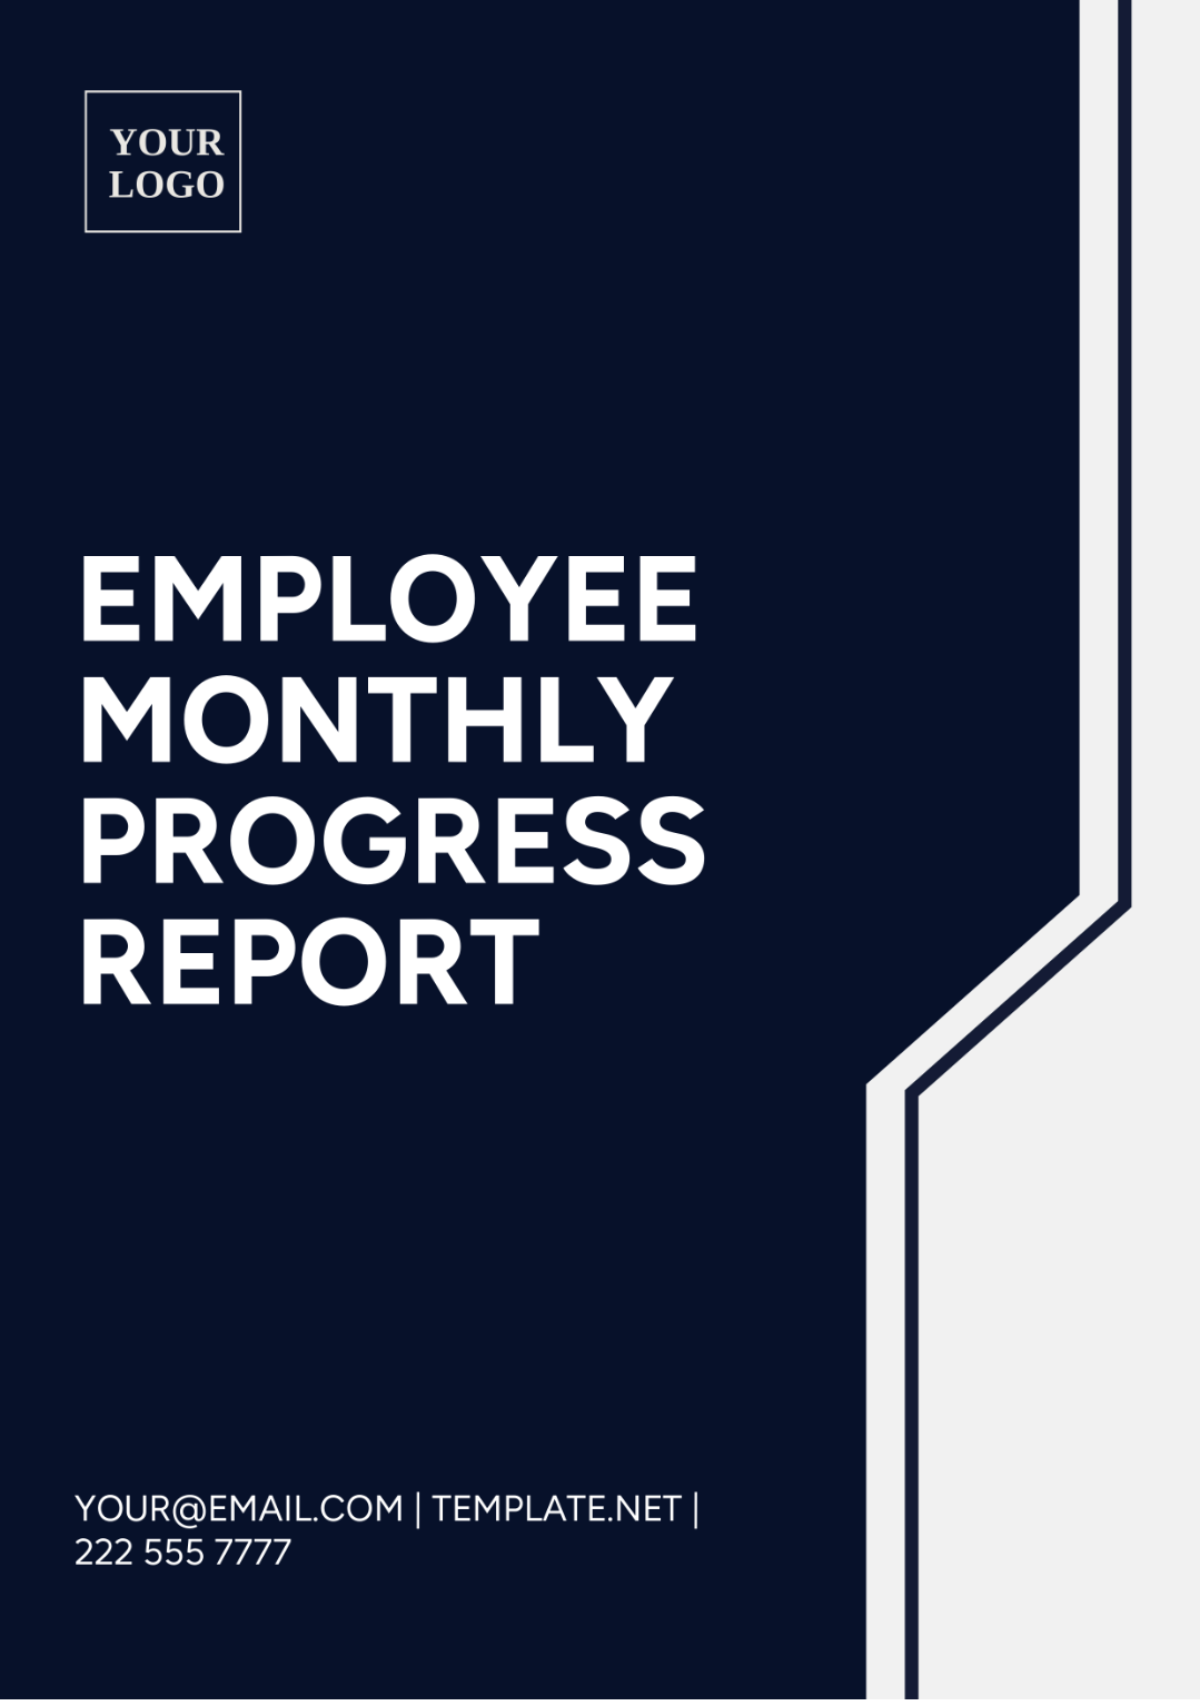 Employee Monthly Progress Report Template